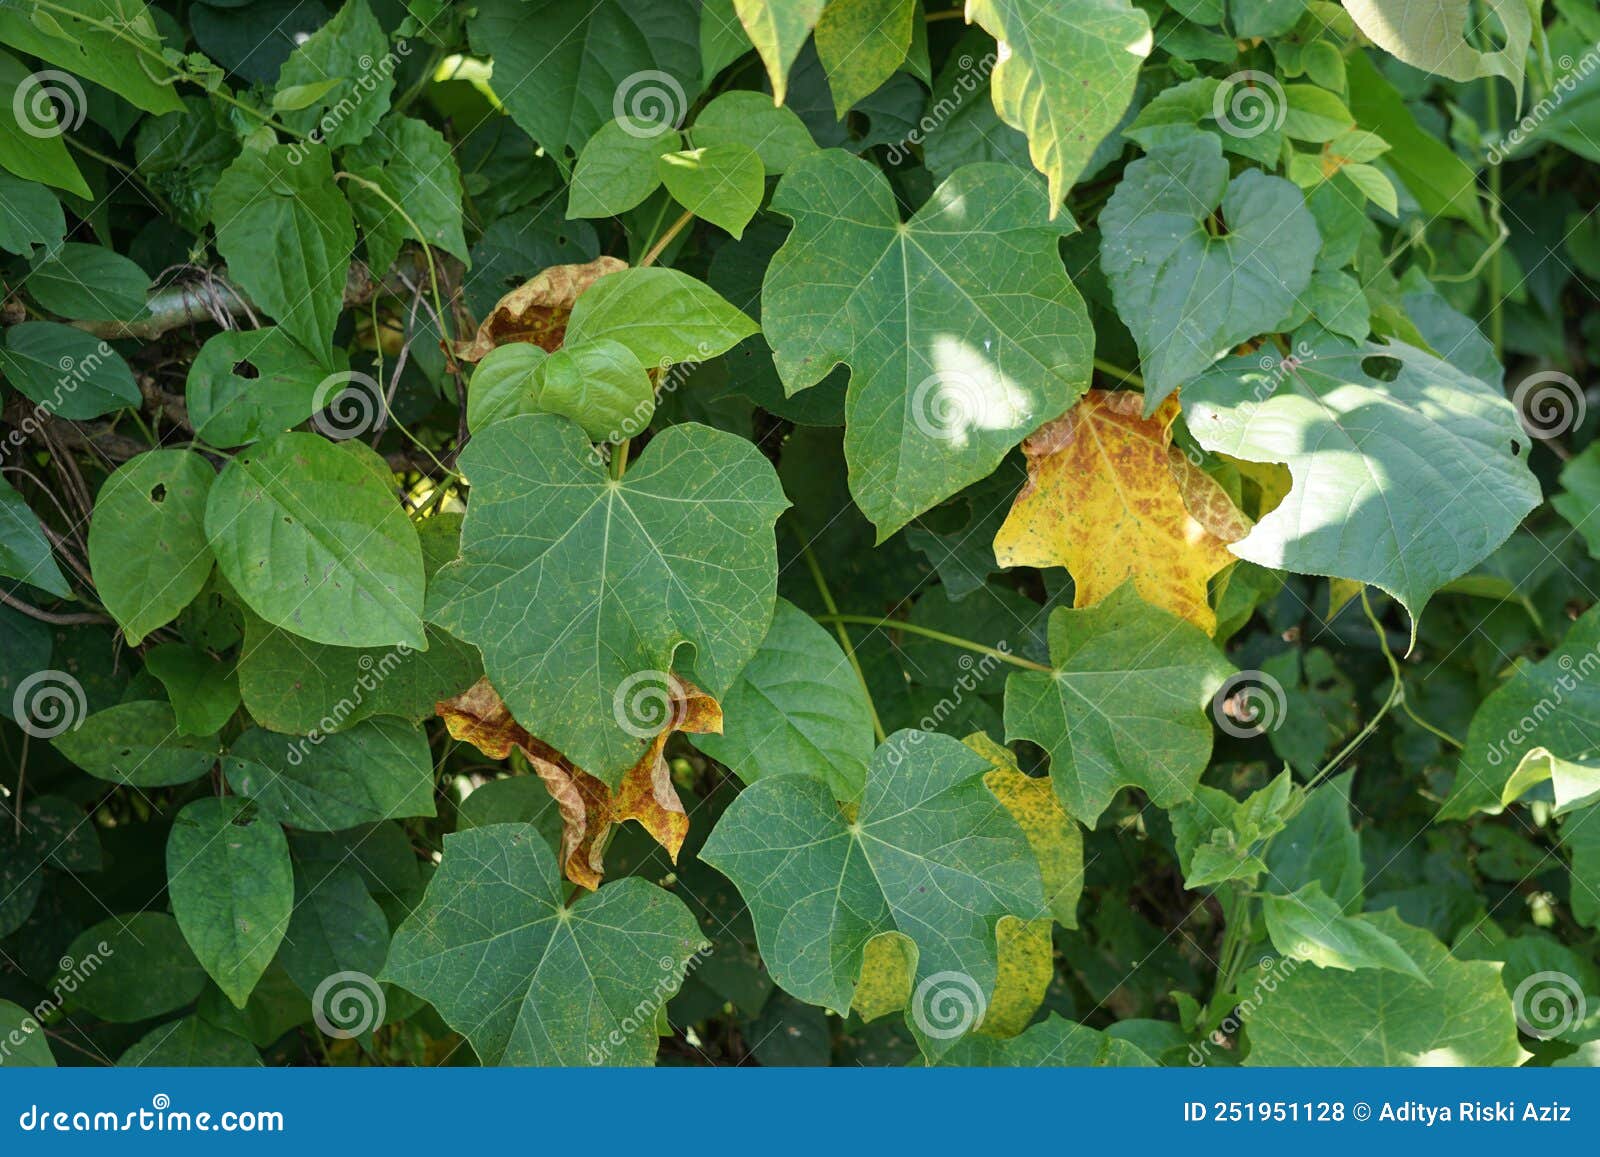 jatropha curcas also called jarak pagar, physic nut, barbados nut, poison nut, bubble bush, purging nut leaves